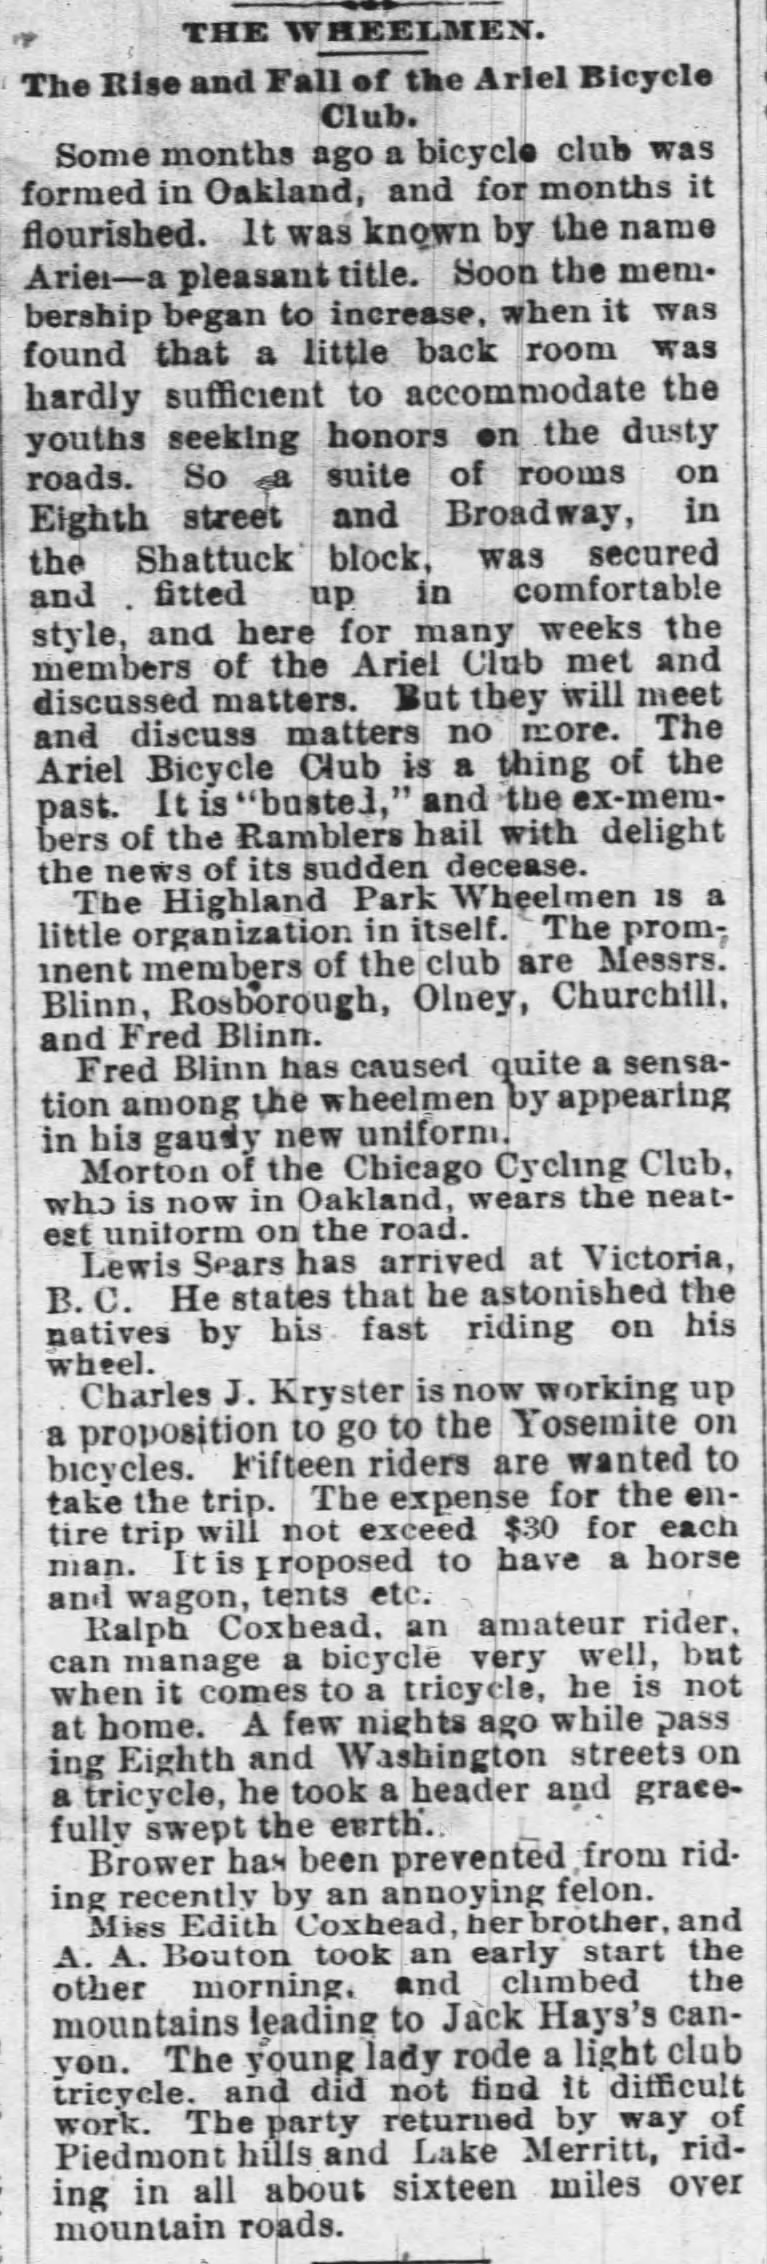 THE WHEELMEN
Ralph & Edith Coxhead, A. A. Bouton, Ariel Bicycle Club
